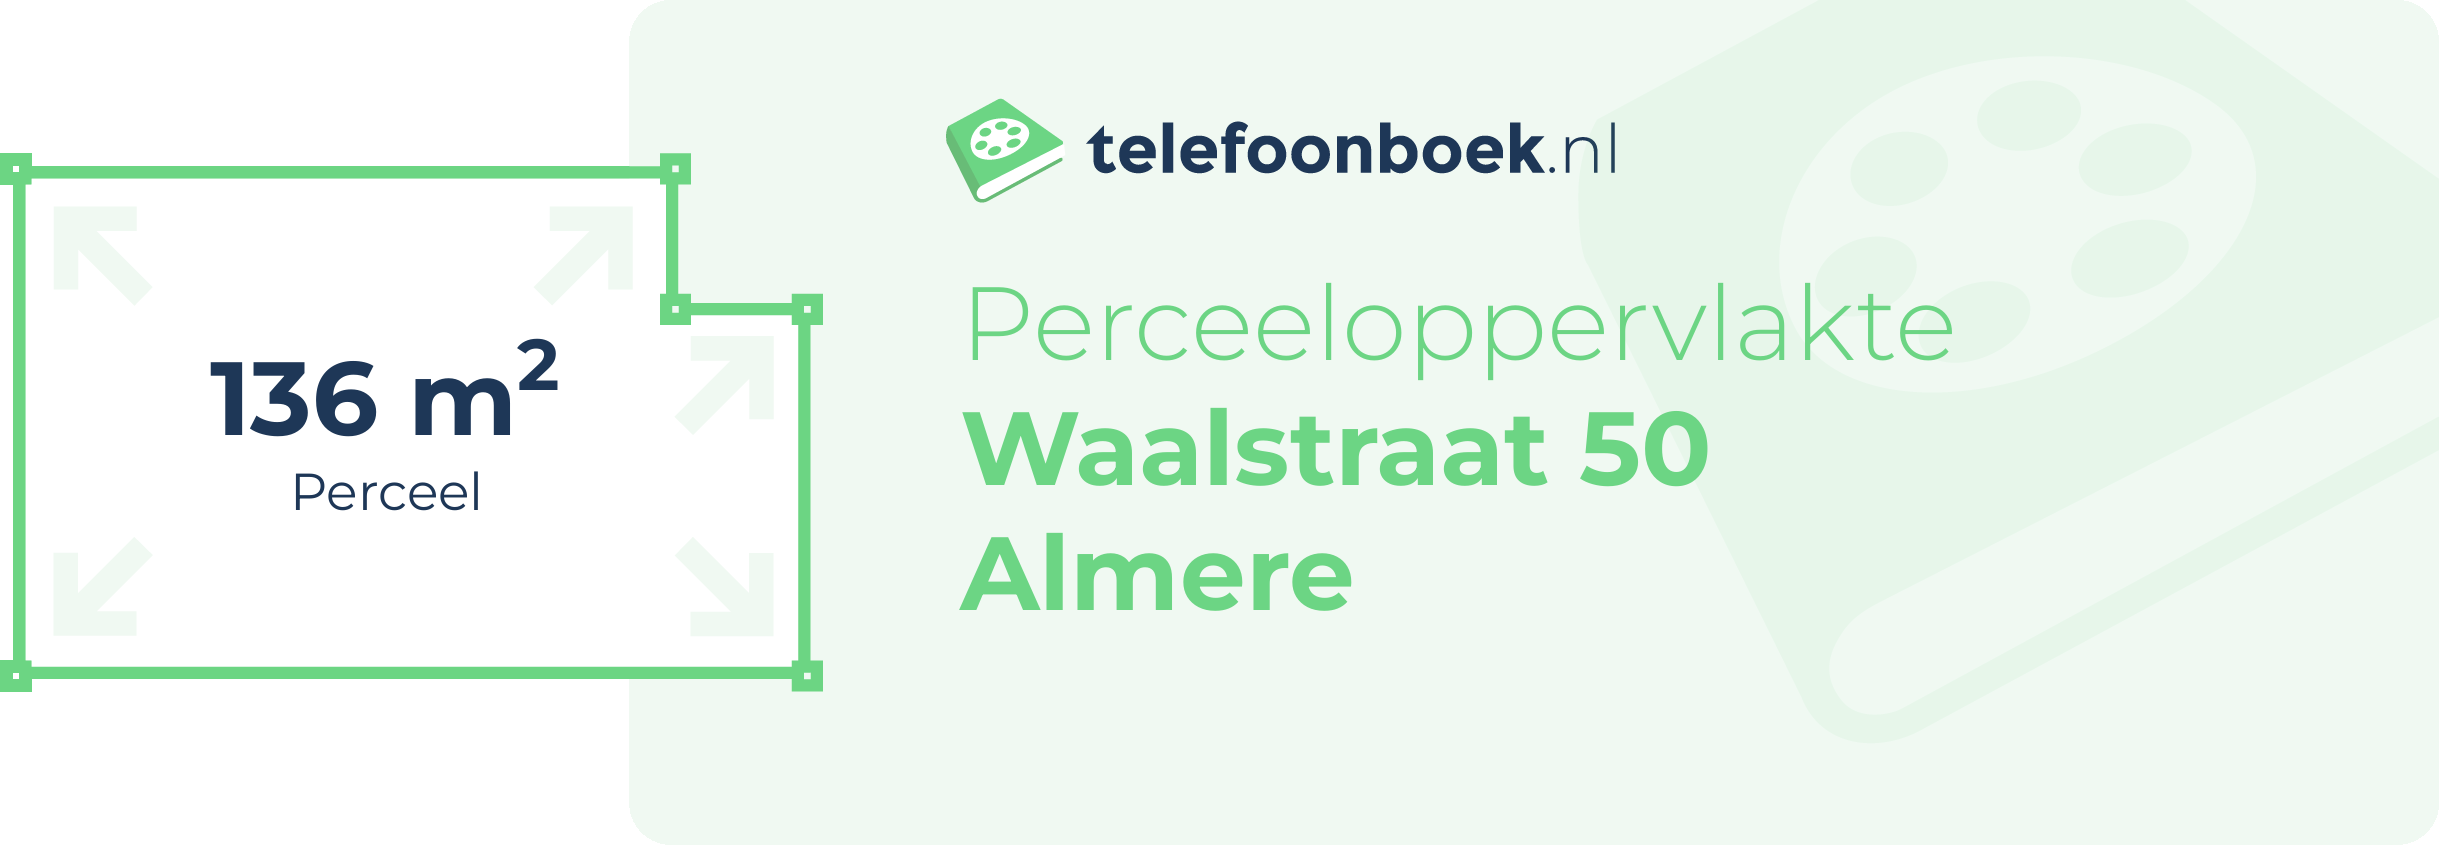 Perceeloppervlakte Waalstraat 50 Almere